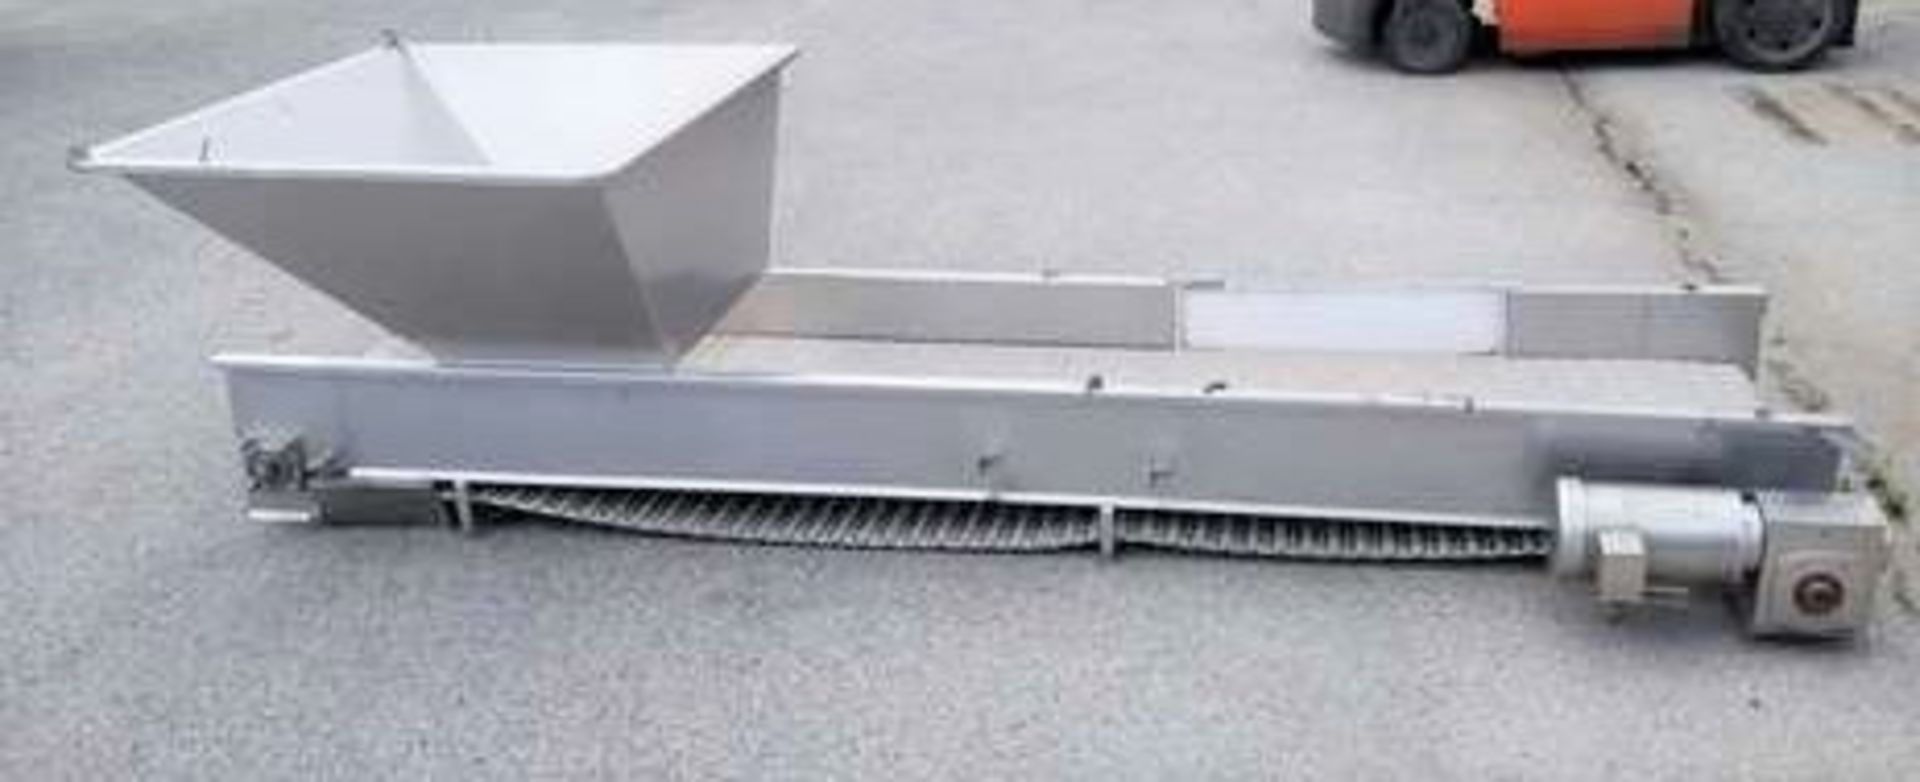 Flat UHMW belt S/S Conveyor with Hopper. 10'L x 24"W belt. Hopper is 17" in from infeed end. Product - Bild 3 aus 4